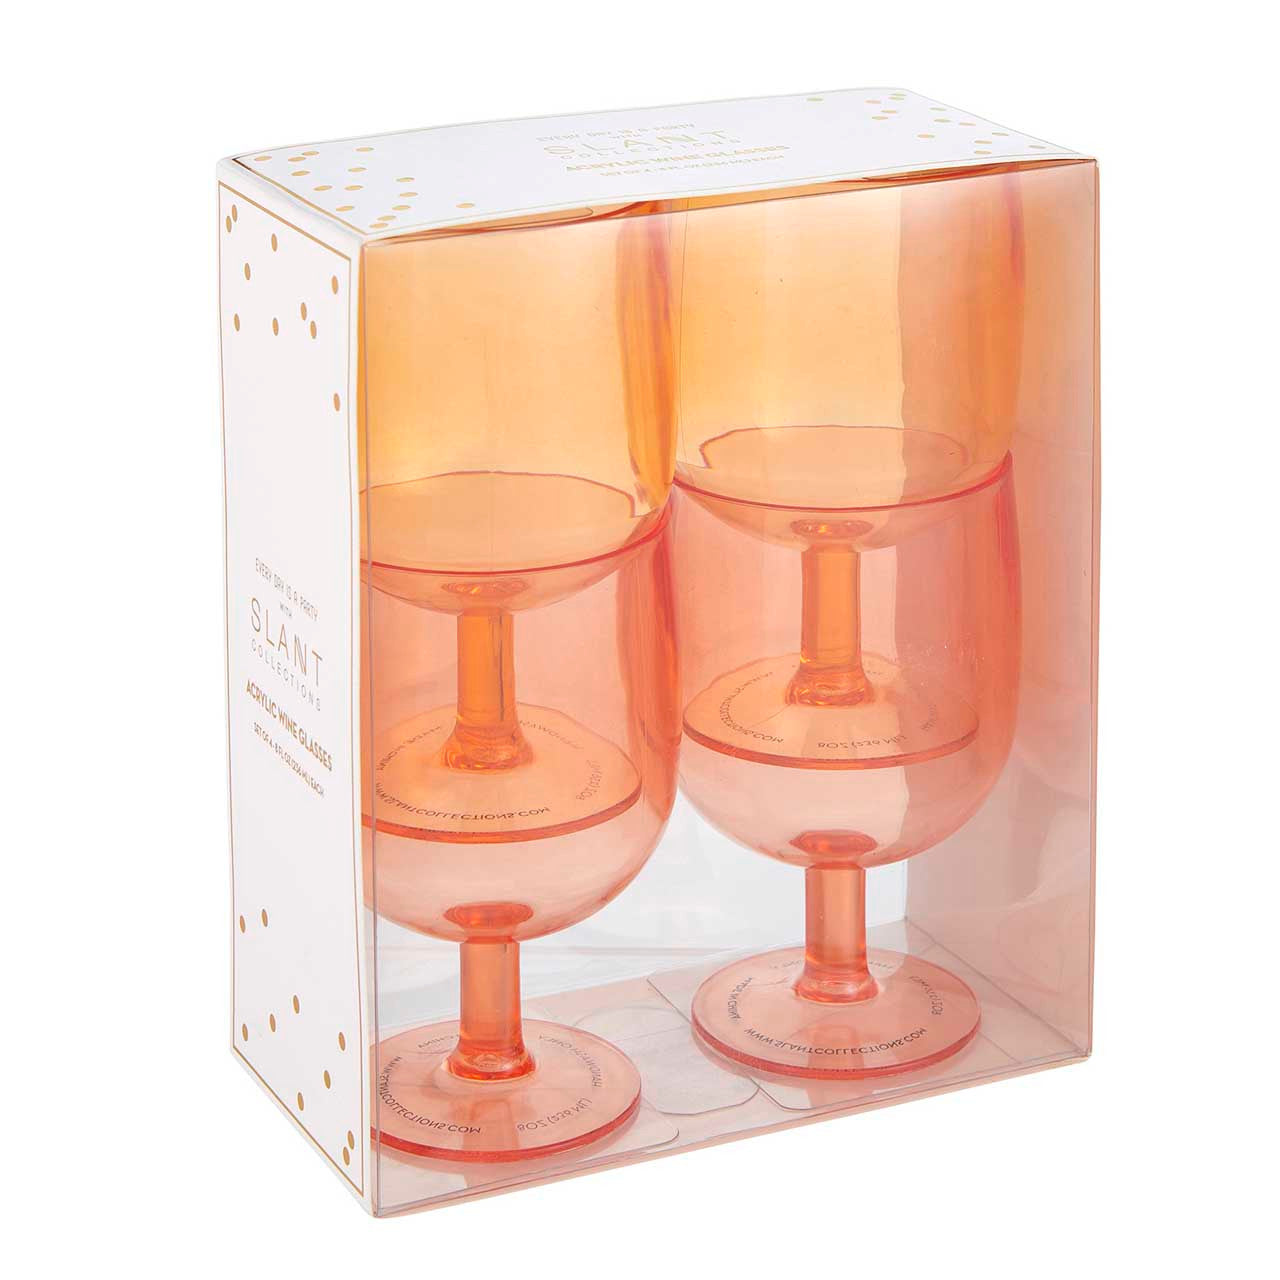 The Bullish Store - Stackable Acrylic Stemmed Wine Glasses - Pink Orange - Set of 4